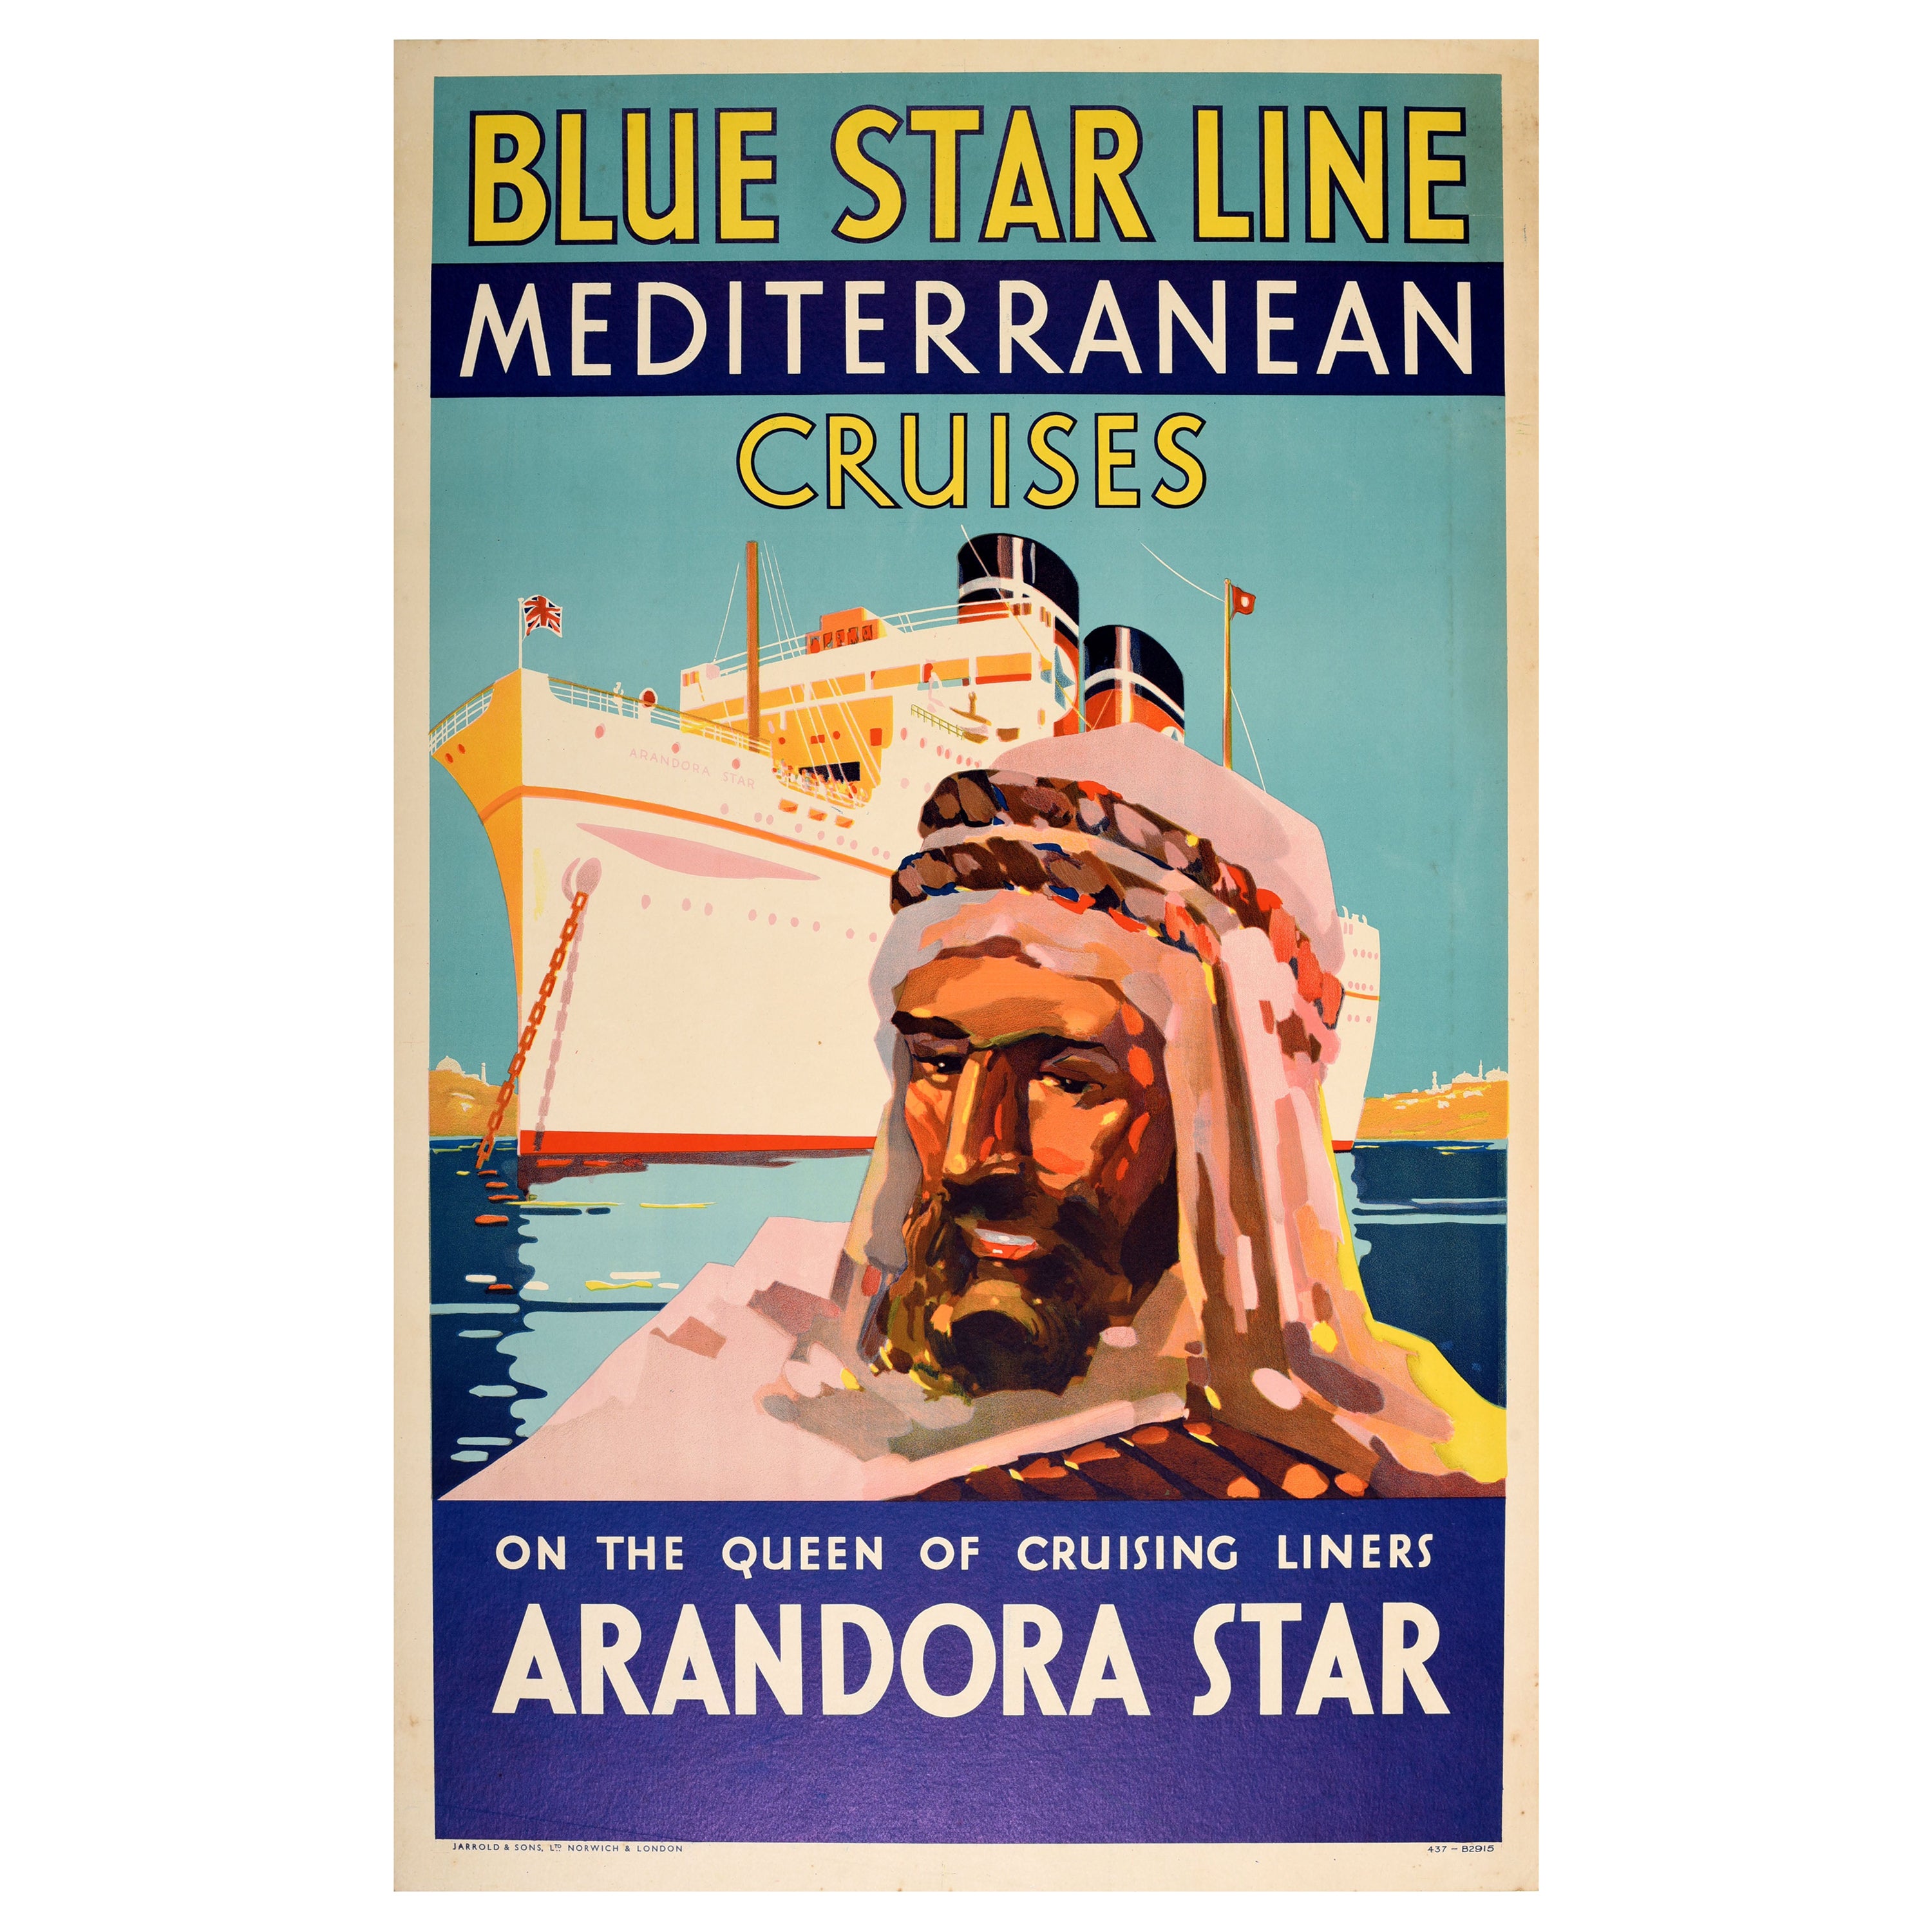 Original Vintage Travel Poster Blue Star Line Mediterranean Cruise Arandora Star For Sale